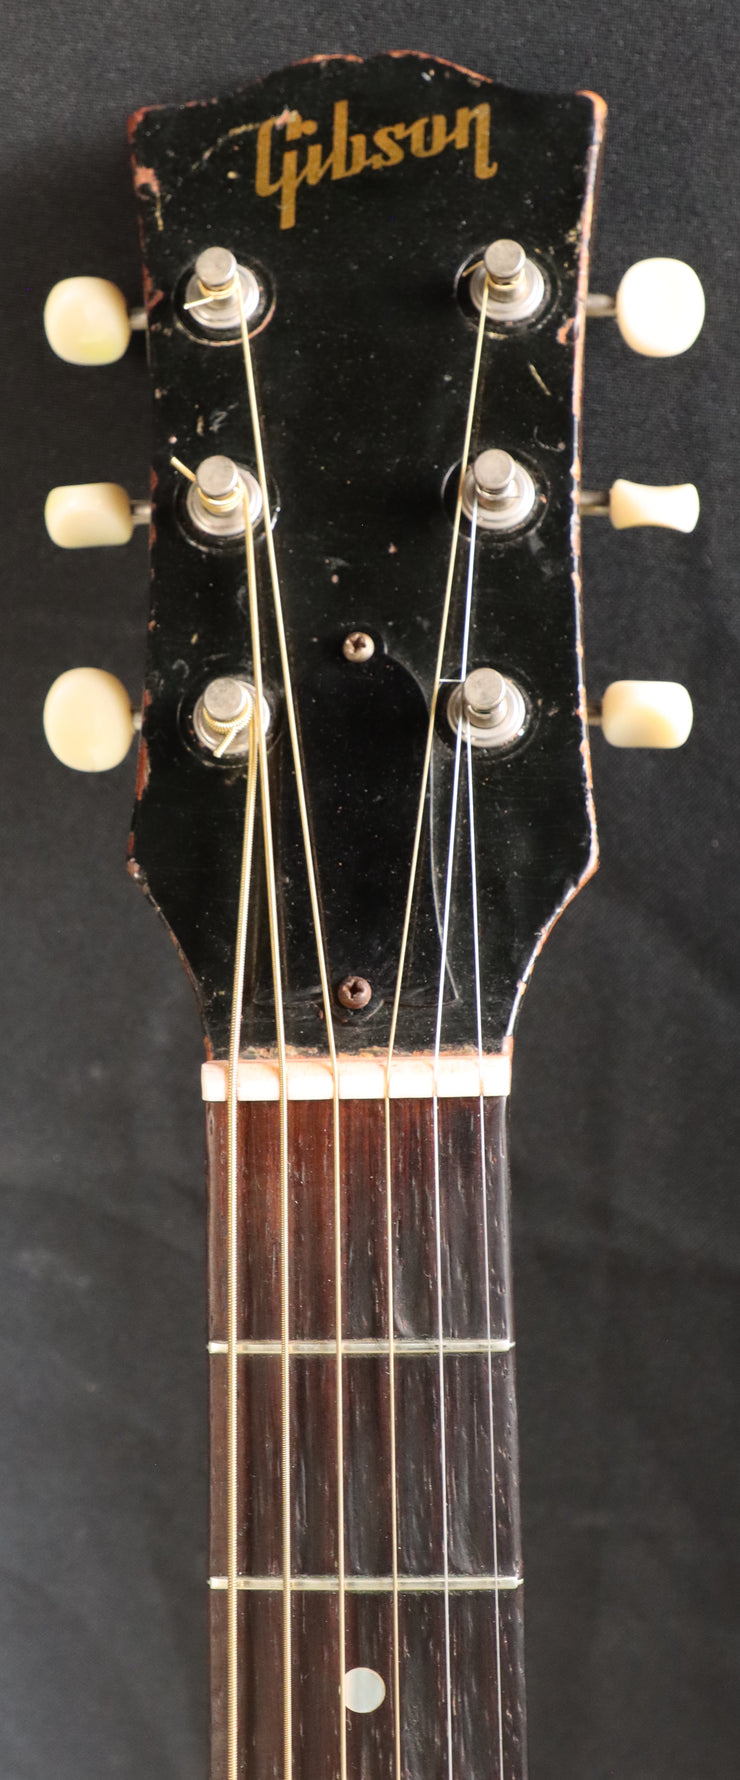 1952 Gibson J45